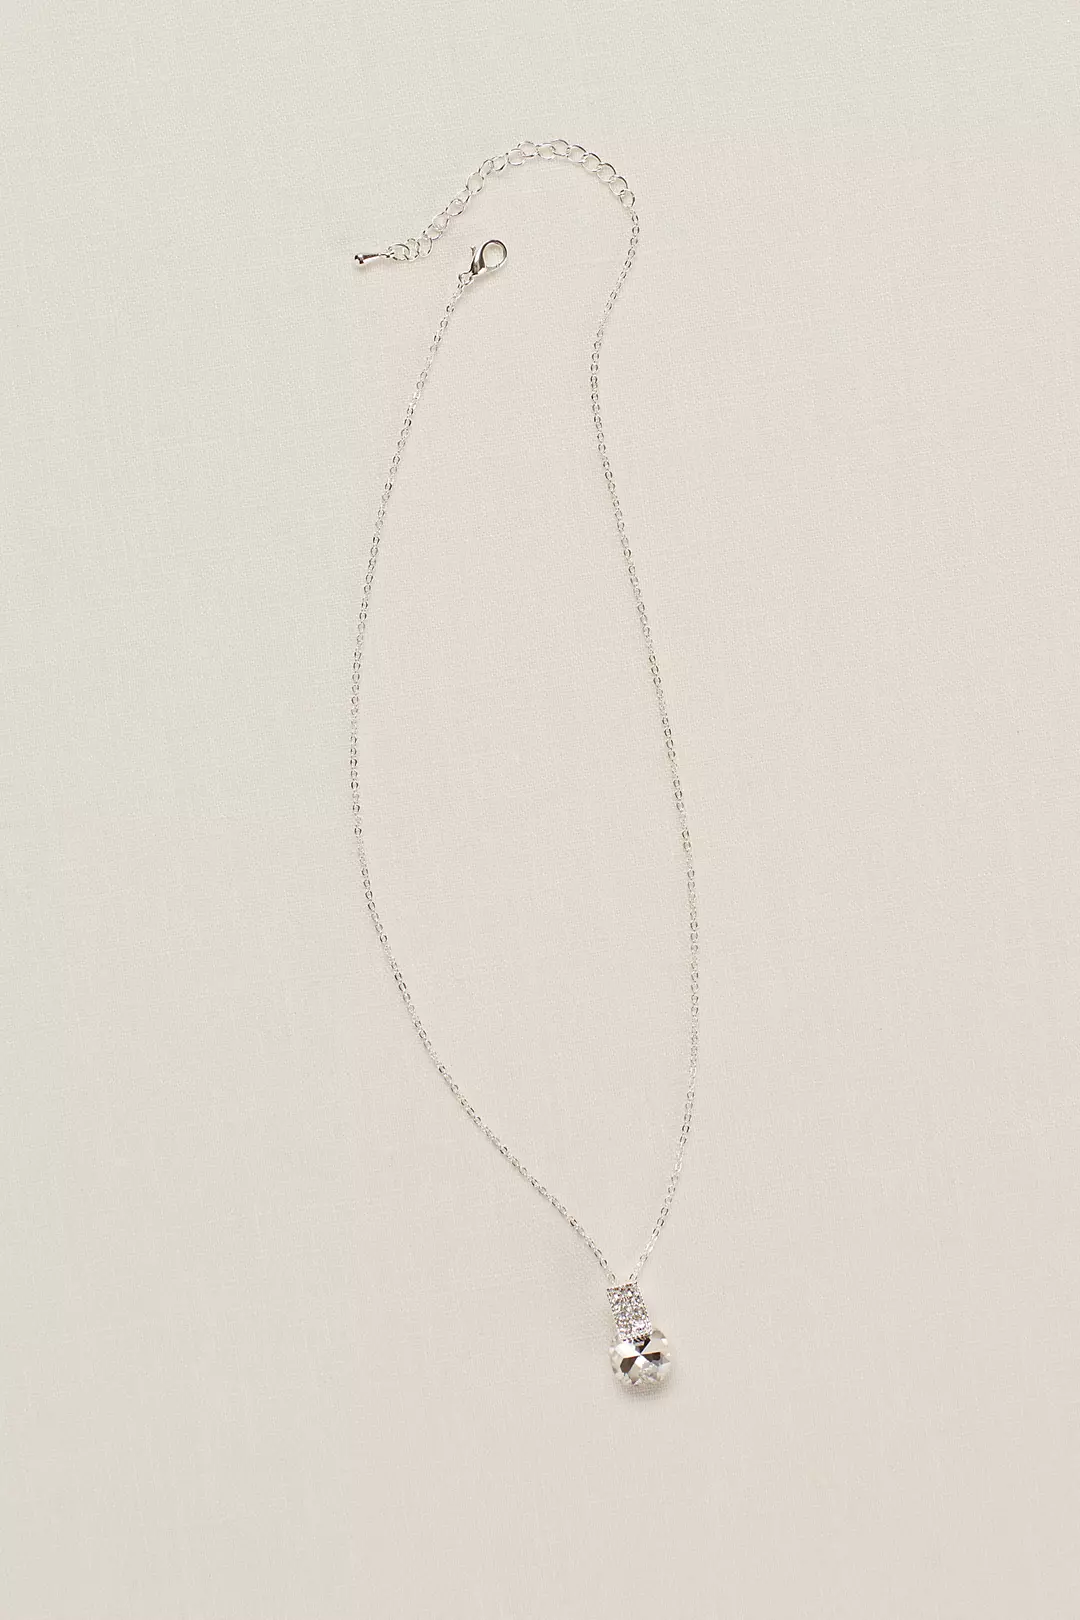 Solitaire and Pave Emblem Pendant Necklace Image